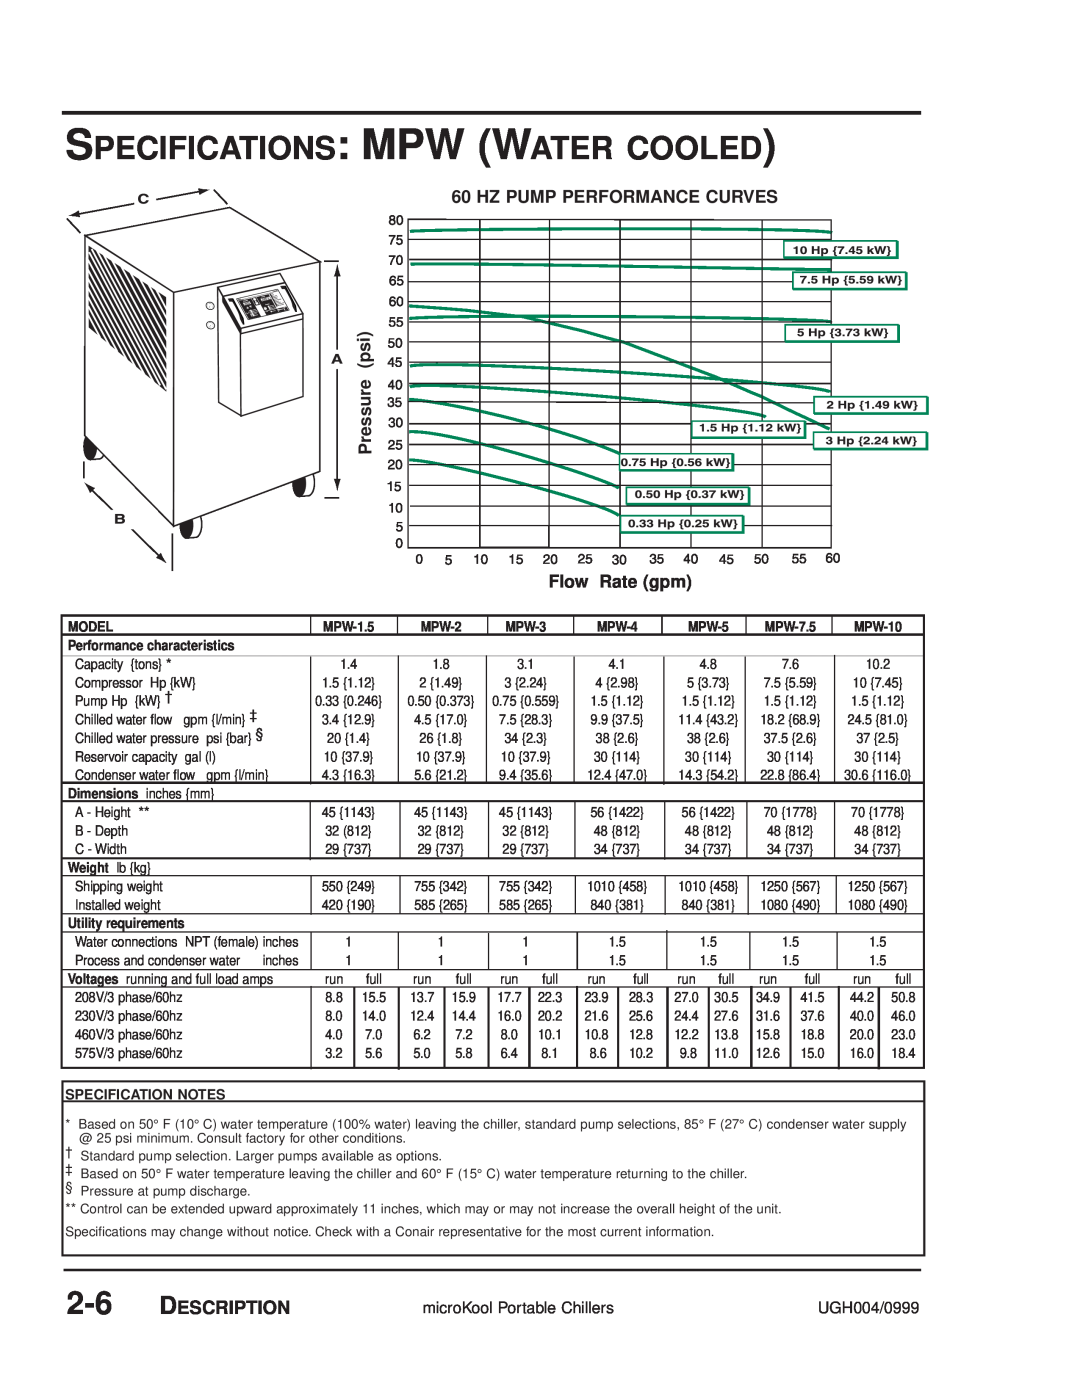 Conair MPA Specifications Mpw Water Cooled, psi Pressure, Description, Model, MPW-2, MPW-3, MPW-4, MPW-5, MPW-7.5, MPW-10 